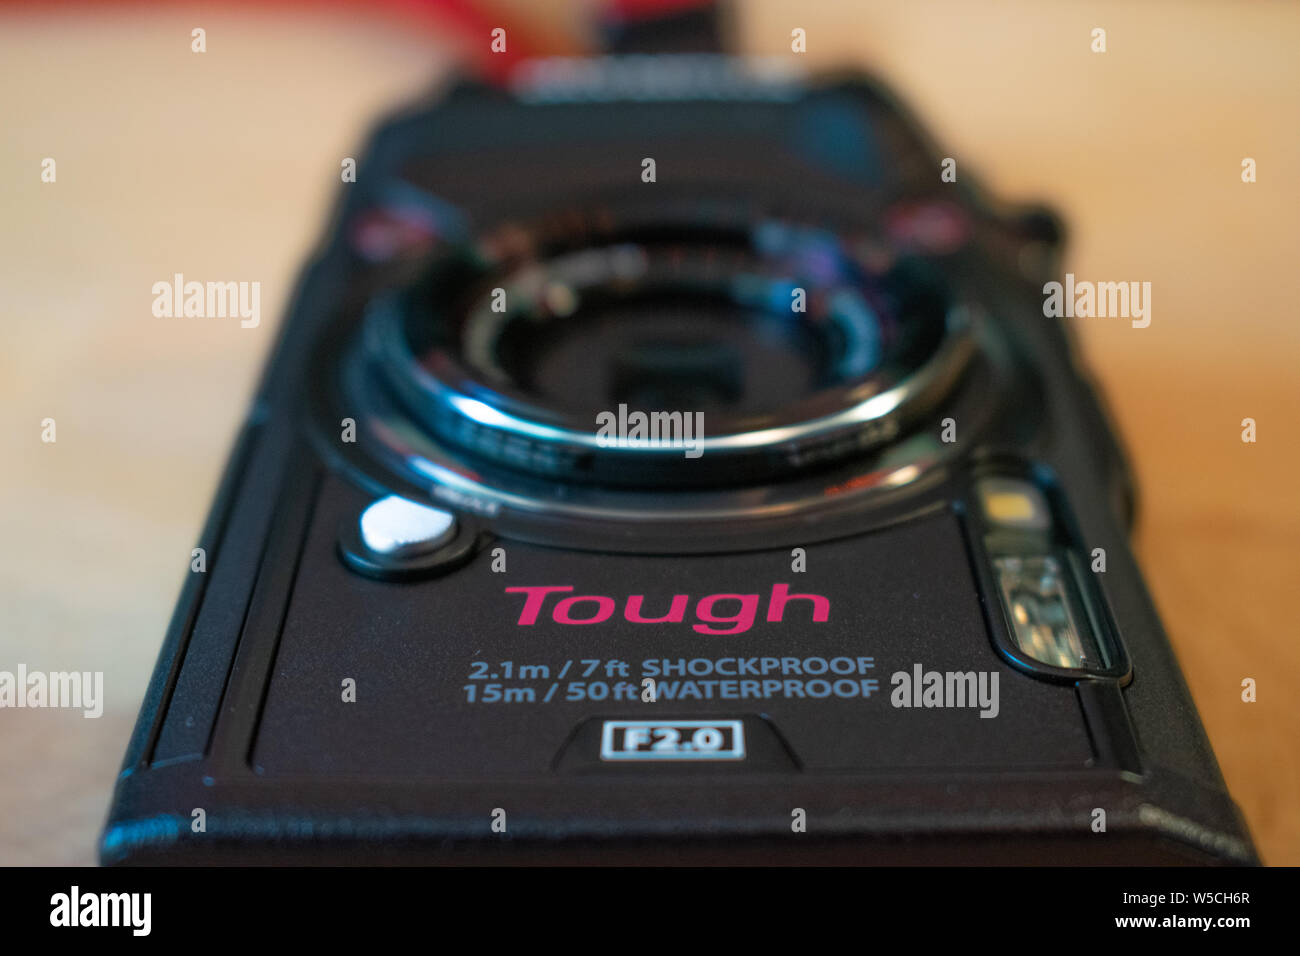 Olympus TOUGH TG-5-A Stoßfest, wasserdicht unzerstörbar Budget kompakte Kamera Stockfoto